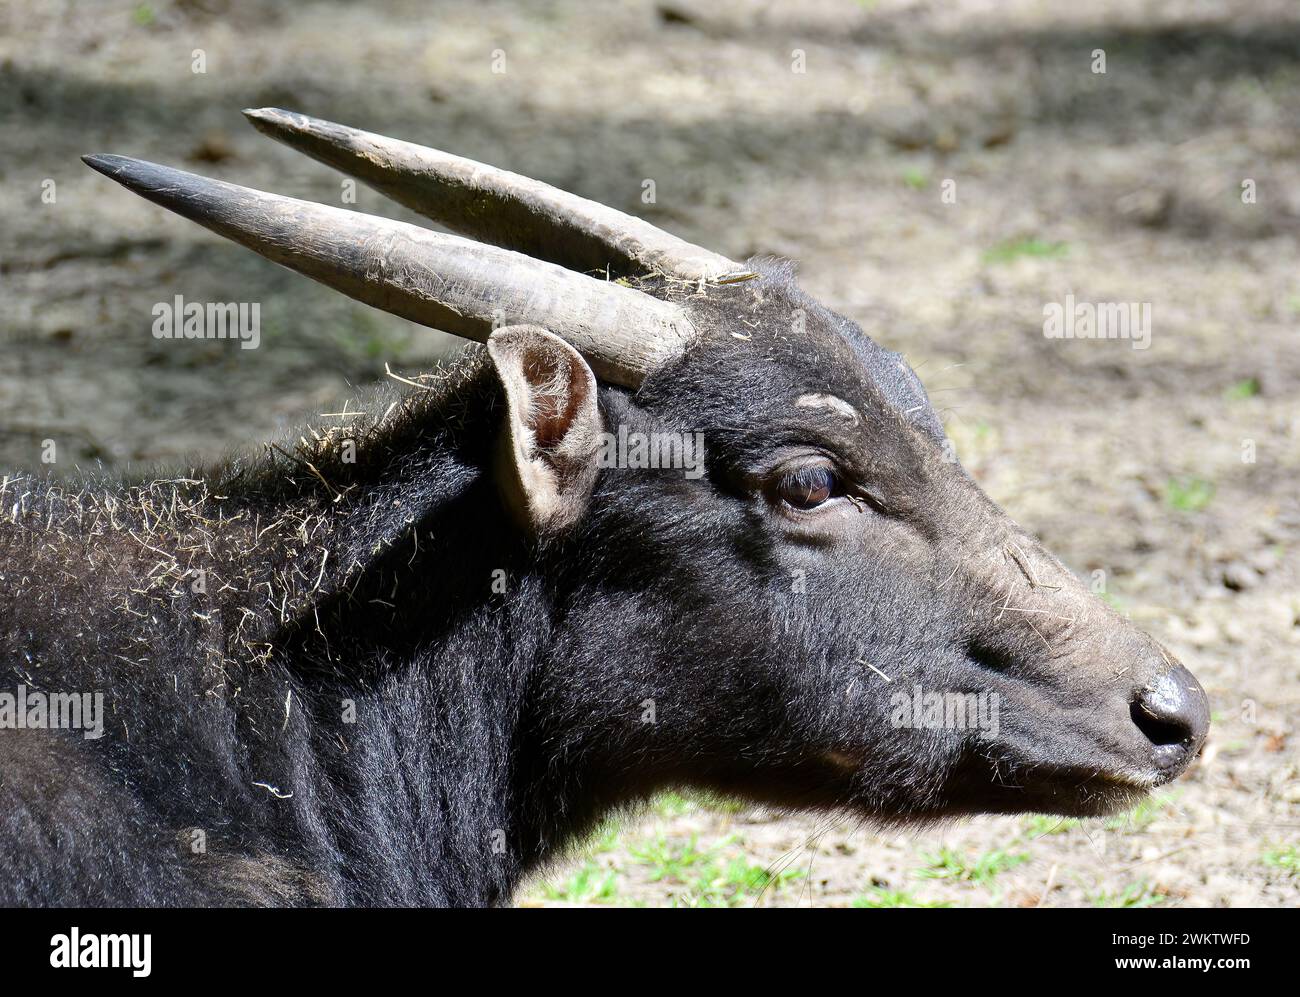 lowland anoa, midget buffalo and sapiutan, Flachland-Anoa, Anoa des plaines, Bubalus depressicornis, alföldi anoa, Zoo, Hungary, Magyarország, Europe Stock Photo